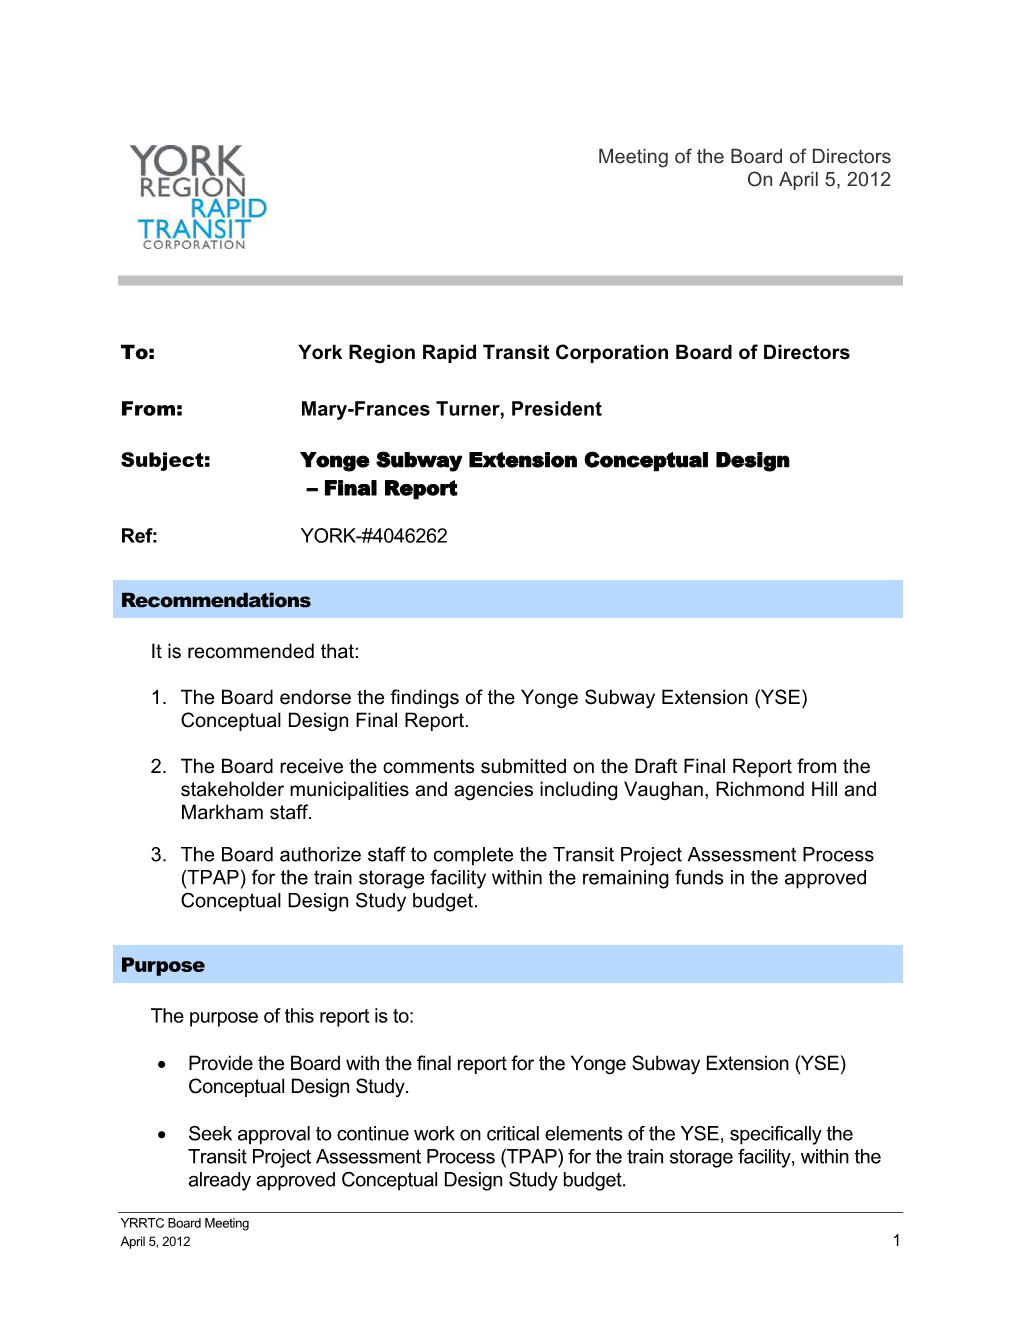 Yonge Subway Extension Conceptual Design – Final Report